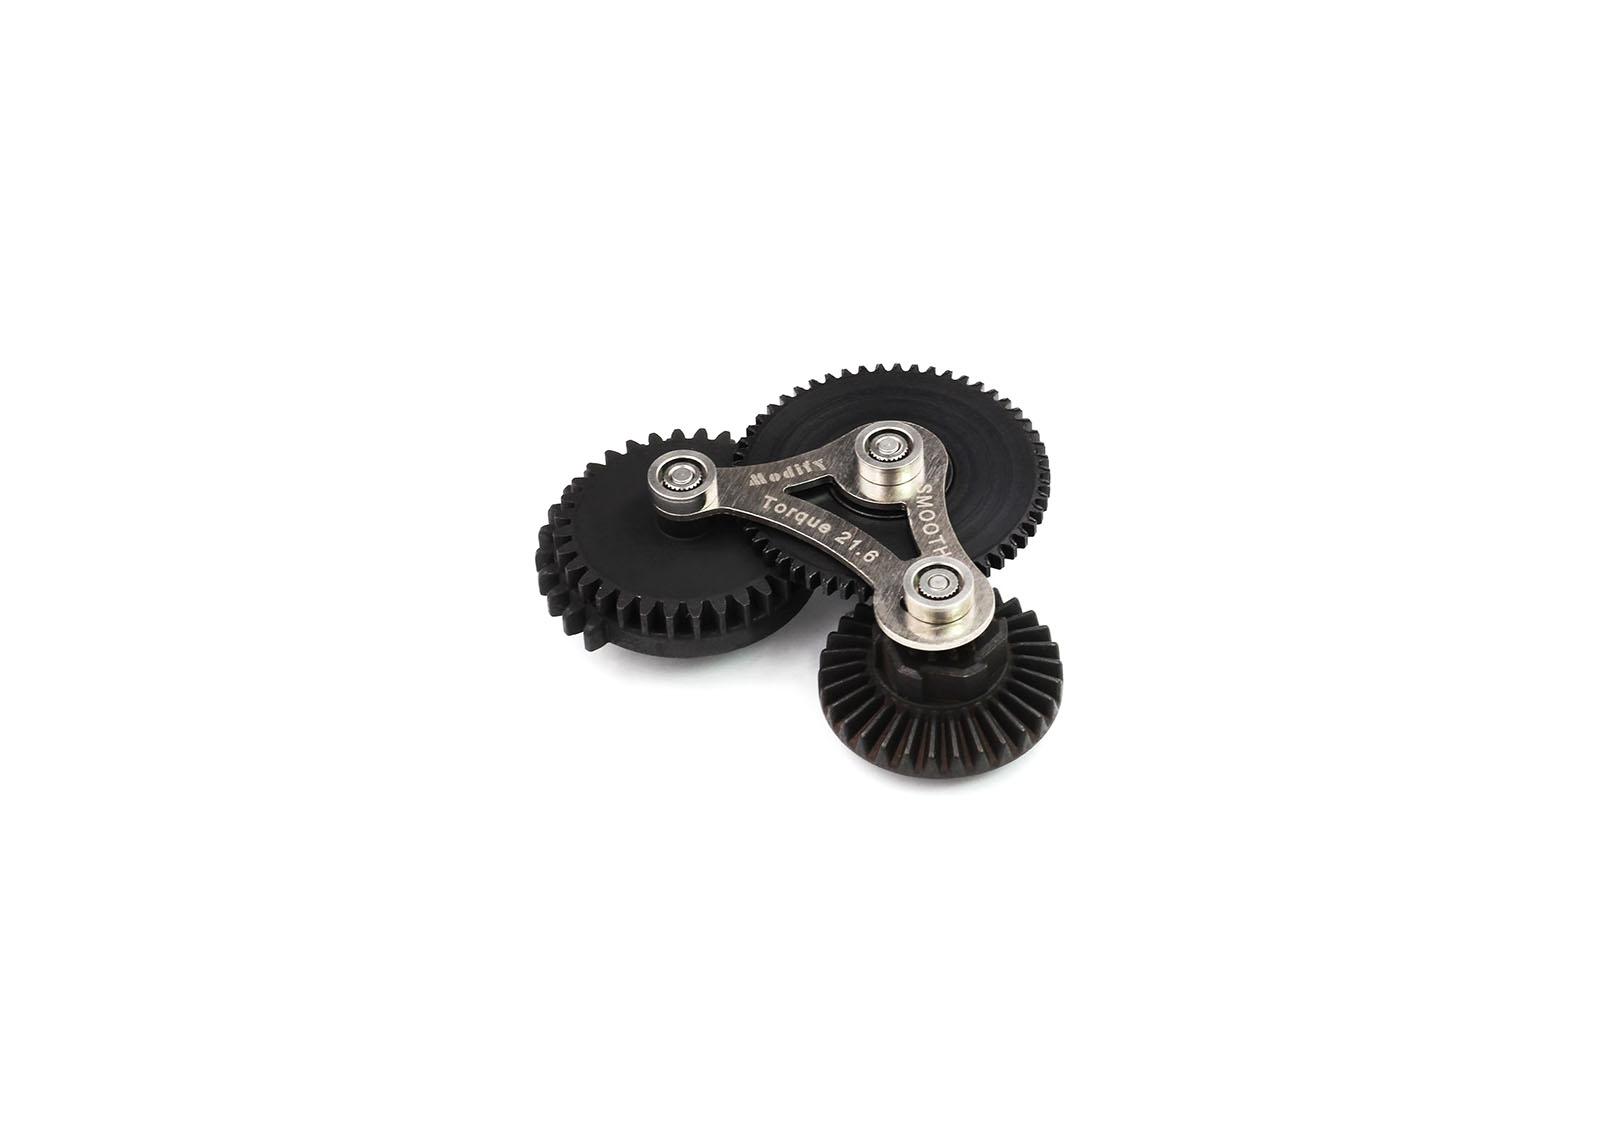 Modular Gear Set - SMOOTH 6mm Ver.2/Ver.3 (NanoTorque 22.2:1+Gear Key) - Modify Airsoft parts